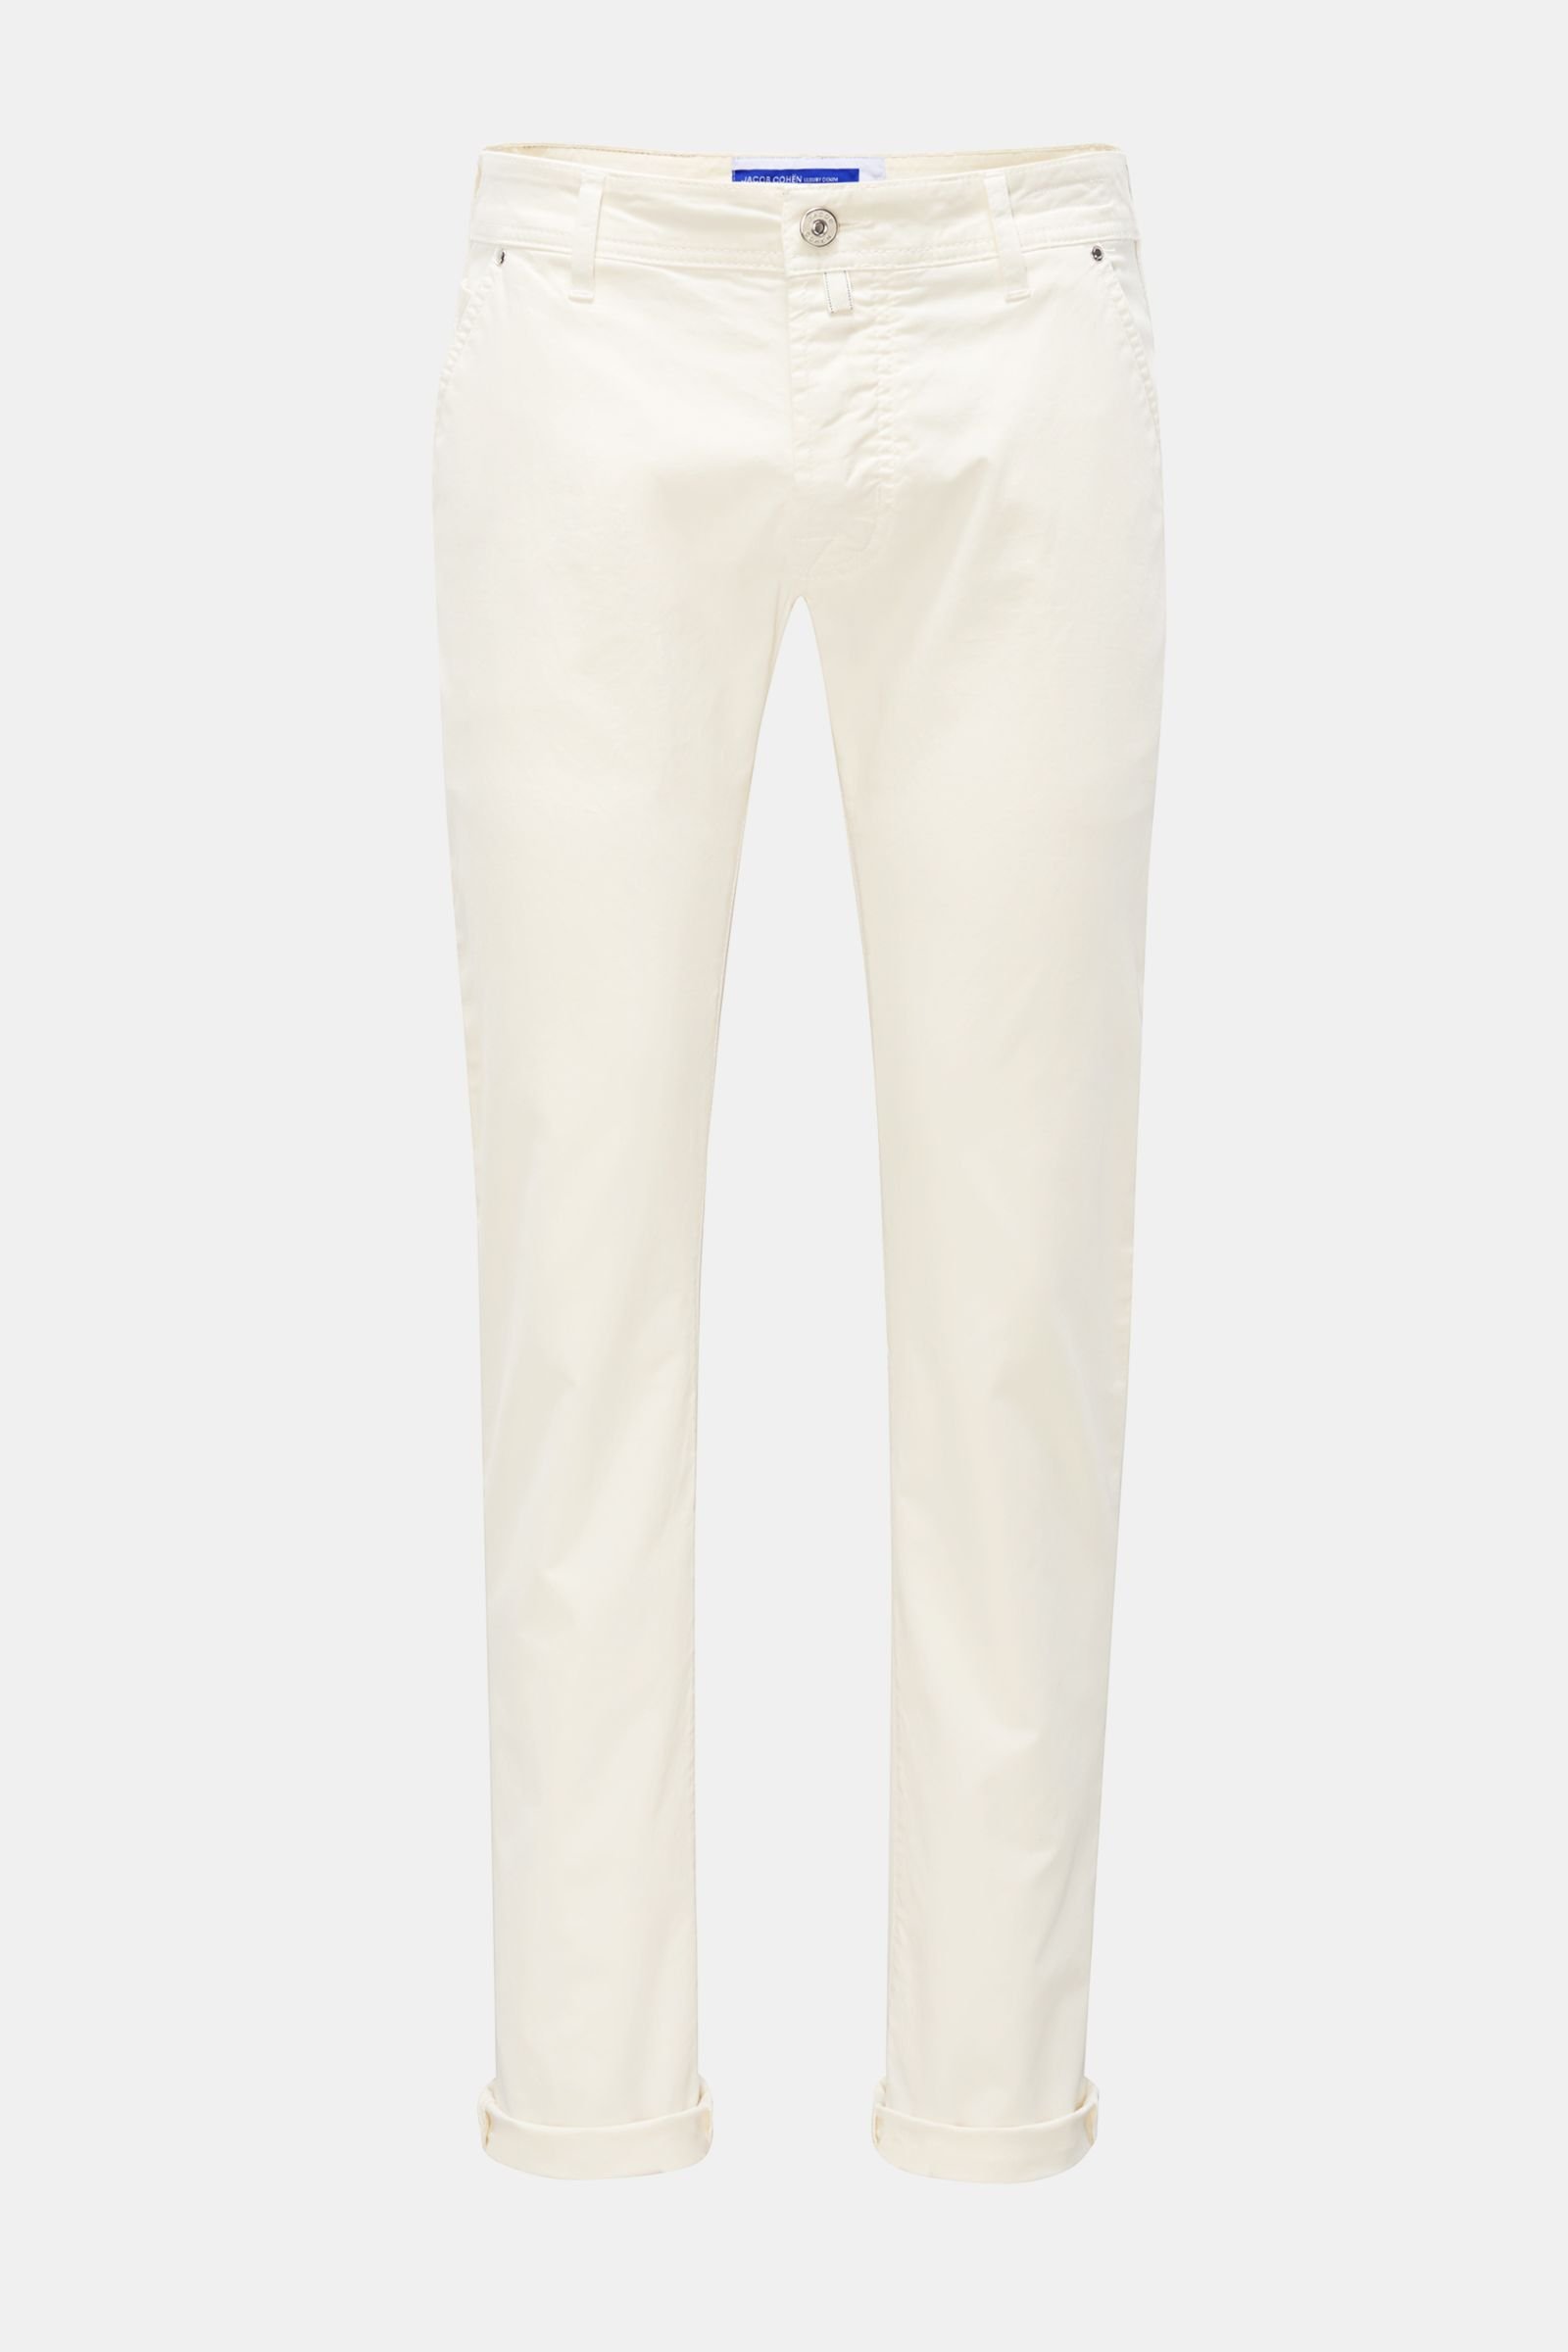 'Leonard' cotton trousers off-white (previously J613)